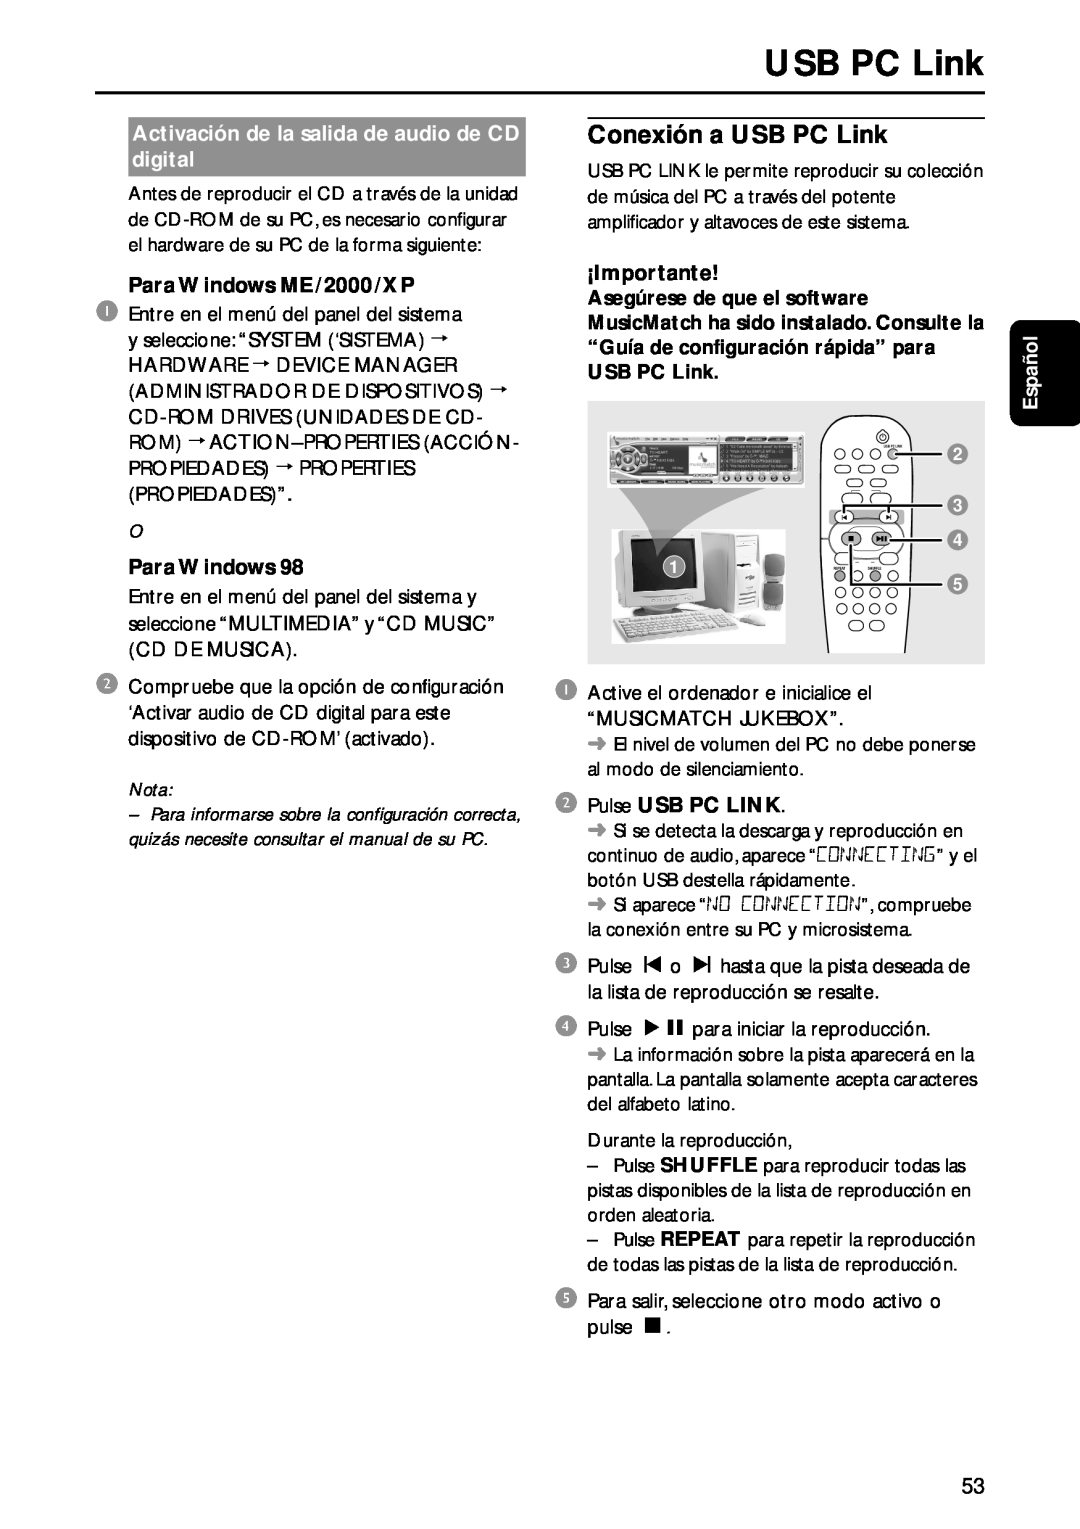 Philips MC-M570 manual USB PC Link, digital, Para Windows ME/2000/XP, Nota, ¡Importante, 2Pulse USB PC LINK, Español 